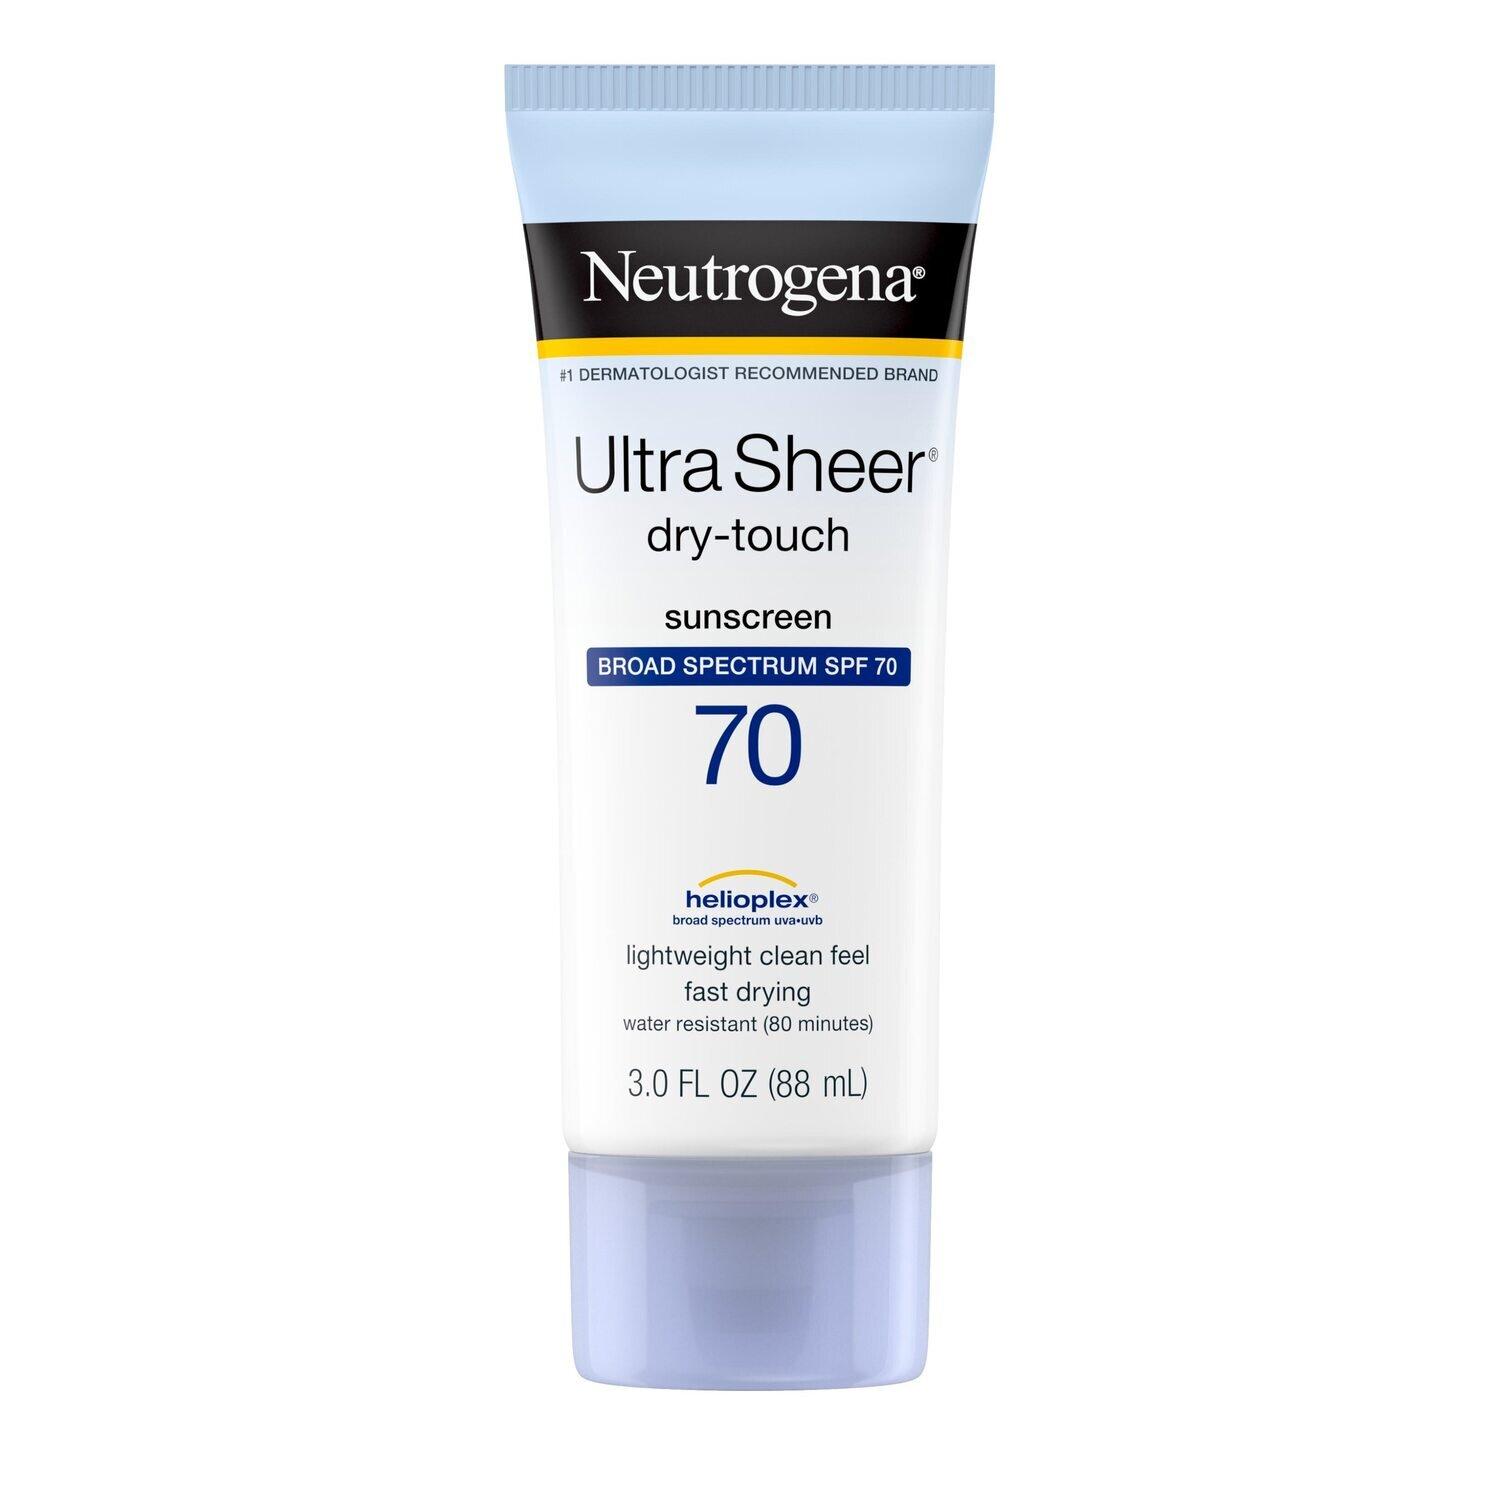 Neutrogena Ultra Sheer SPF 70